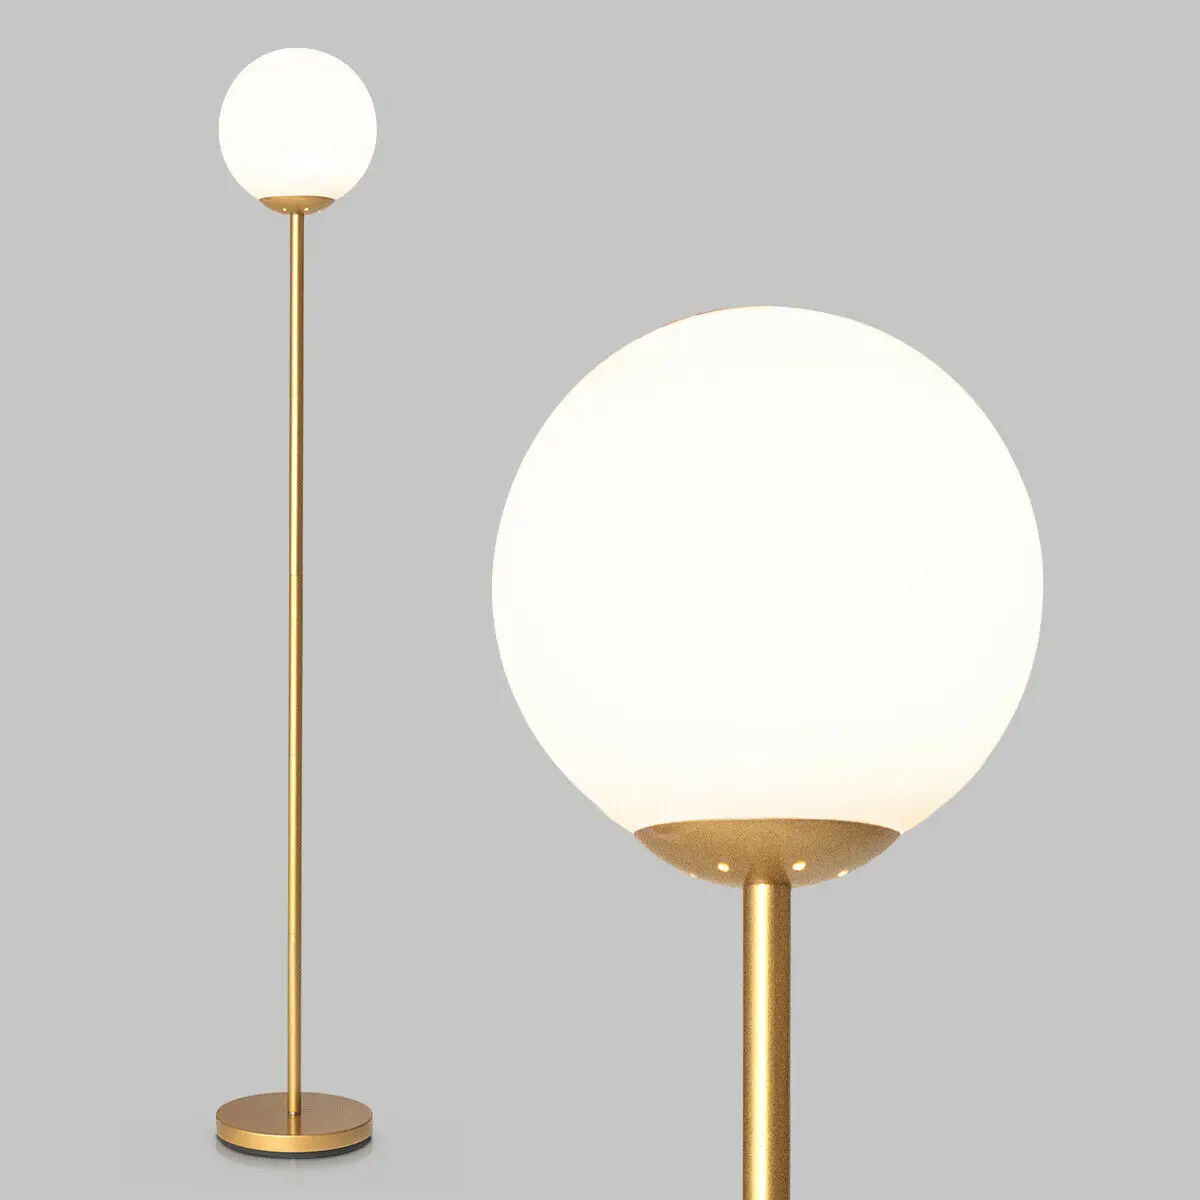 Glass Globe LED Floor Lamp w/ Acrylic Lampshade Bedroom Office